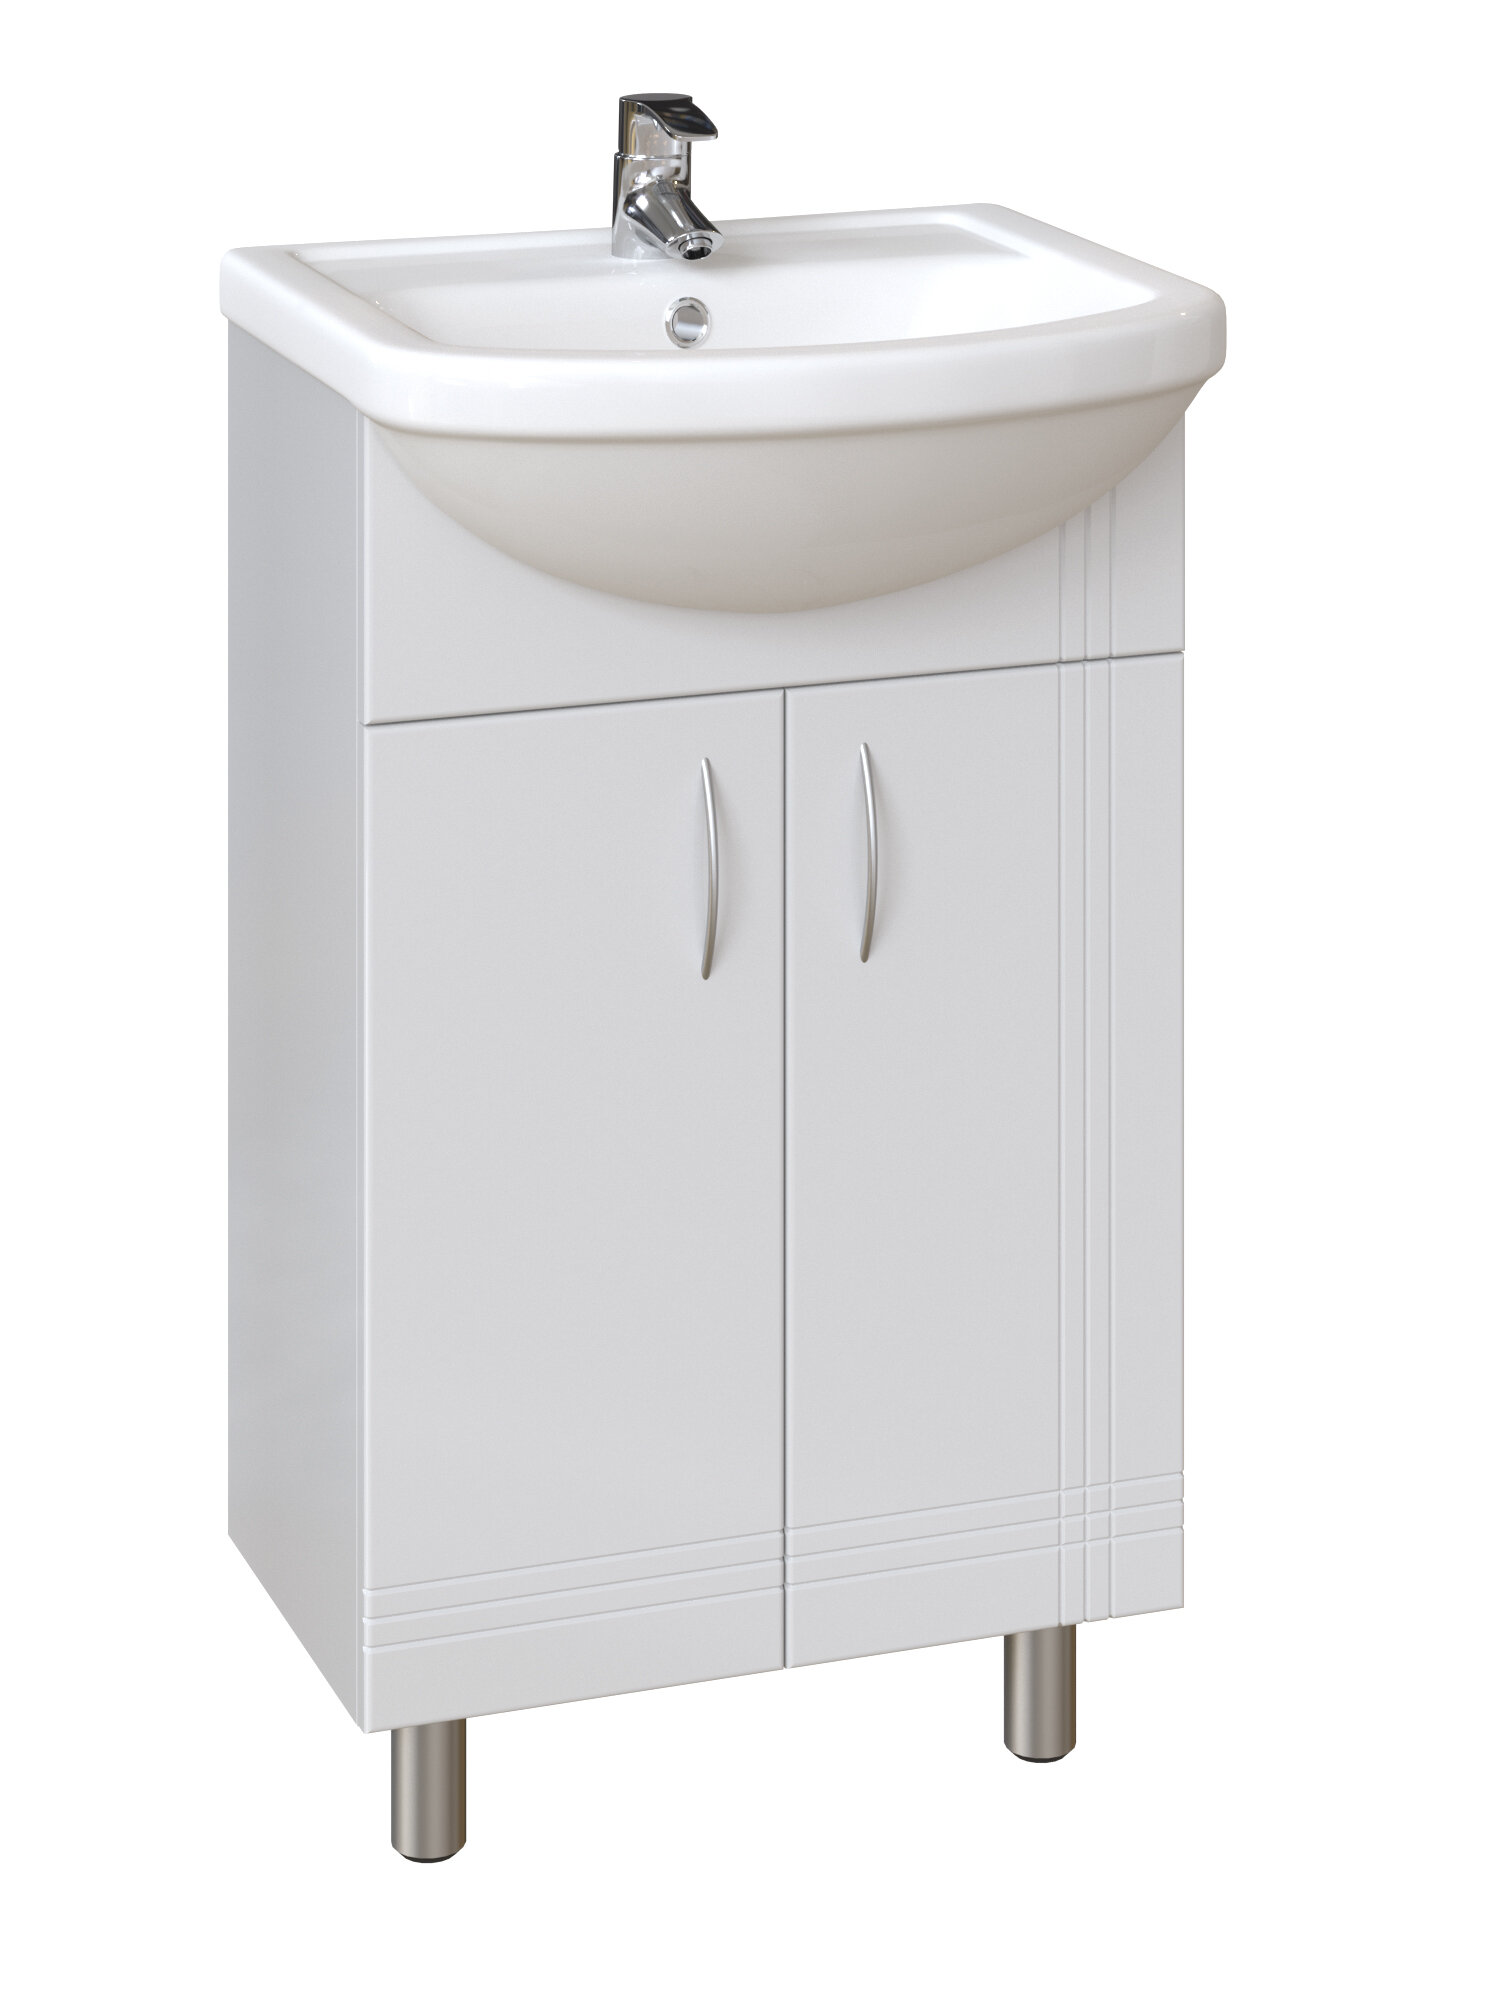 фото Тумба напольная sanstar вольга 50 без раковины для ванной комнаты, белая